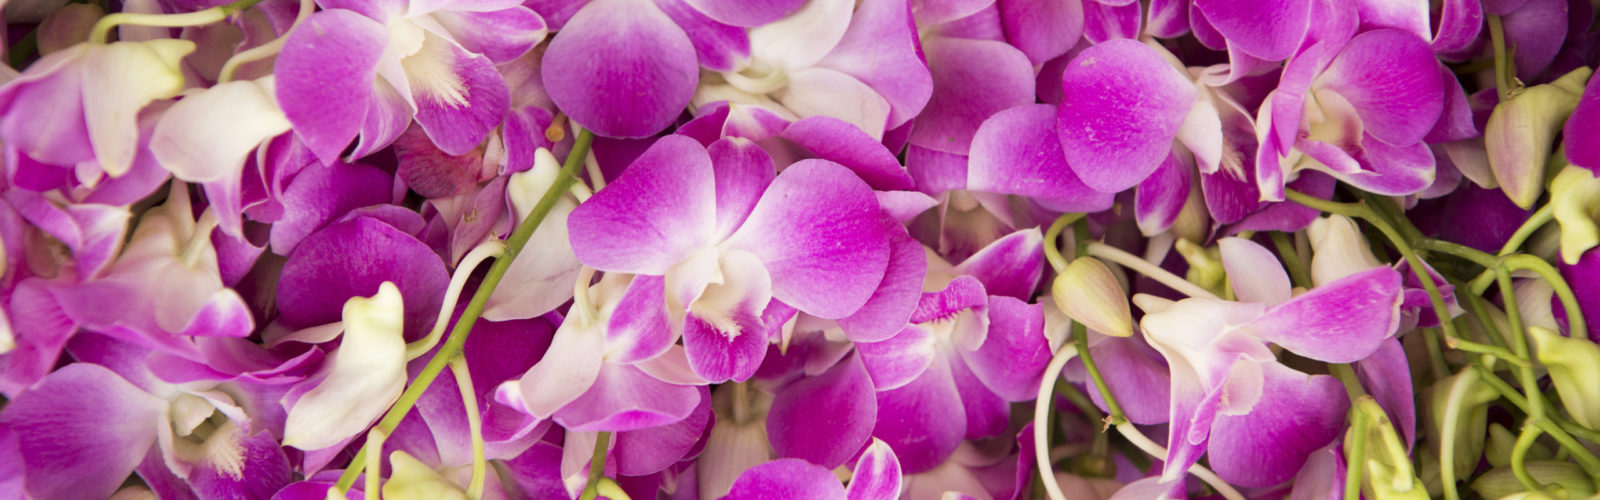 thailand-orchids